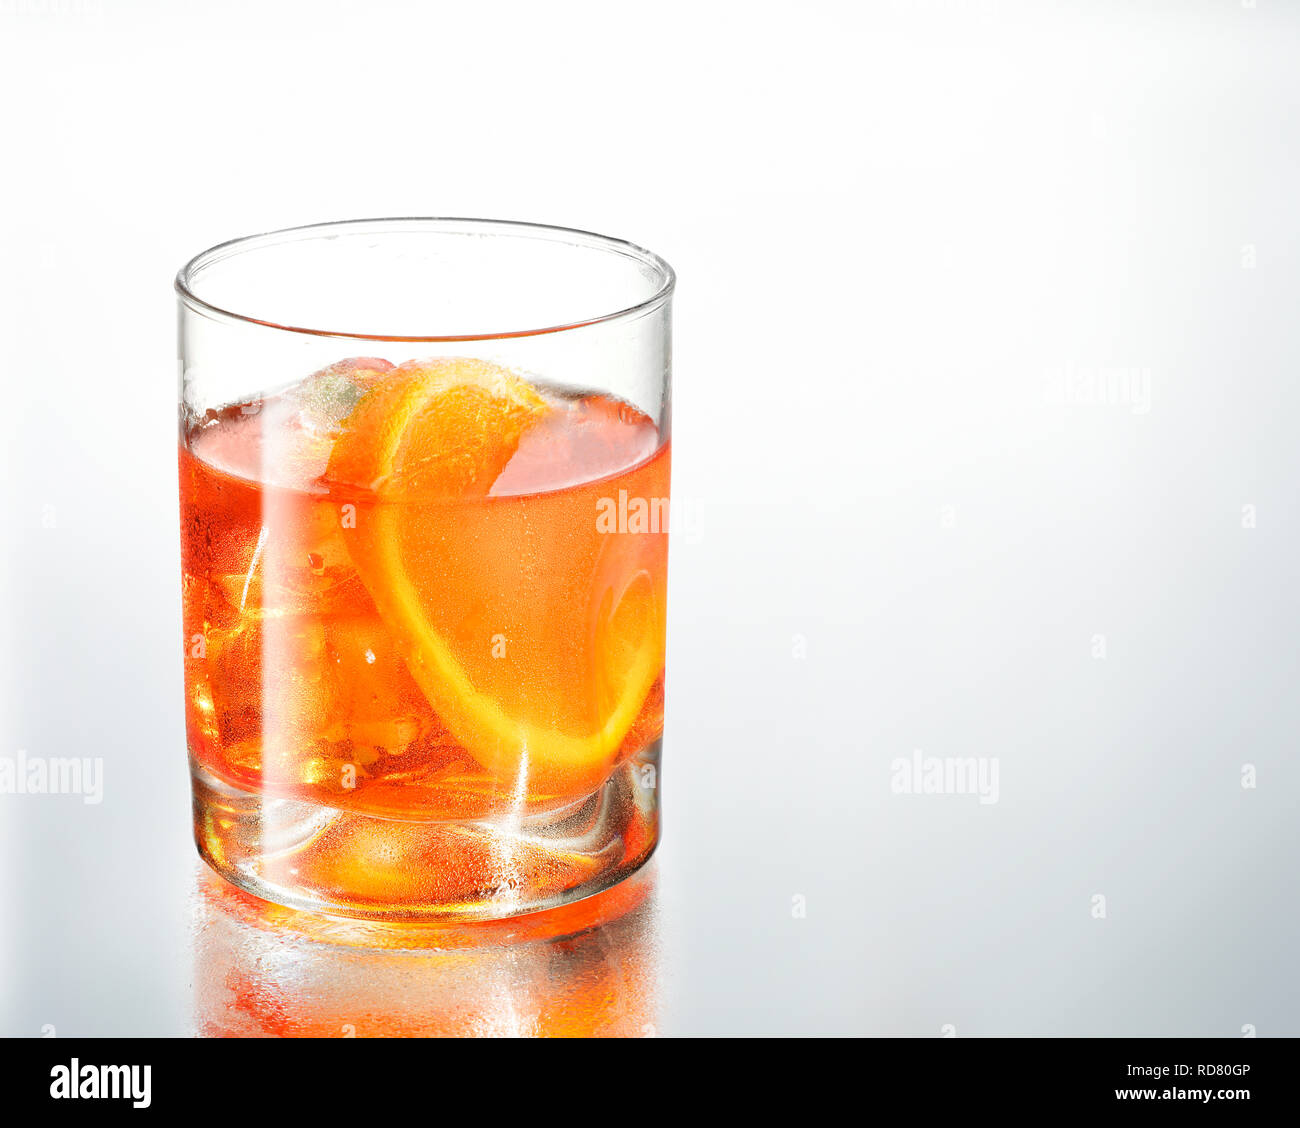 Glass of drink with a slice of orange, studio shot Stock Photo